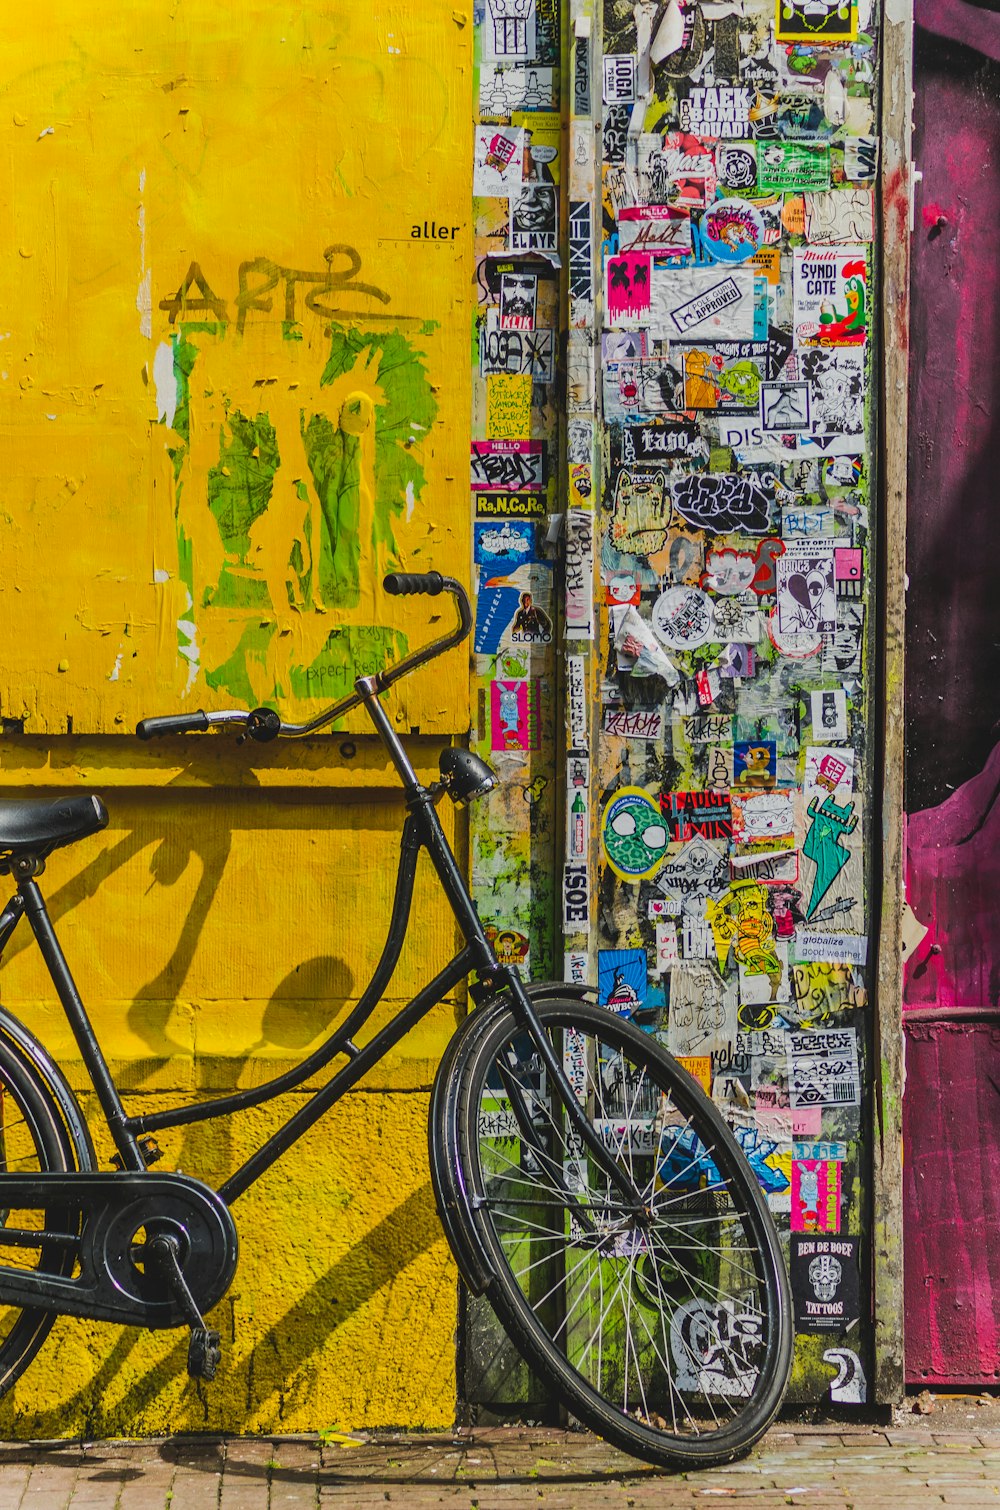 Fahrrad neben Wand voller Aufkleber geparkt